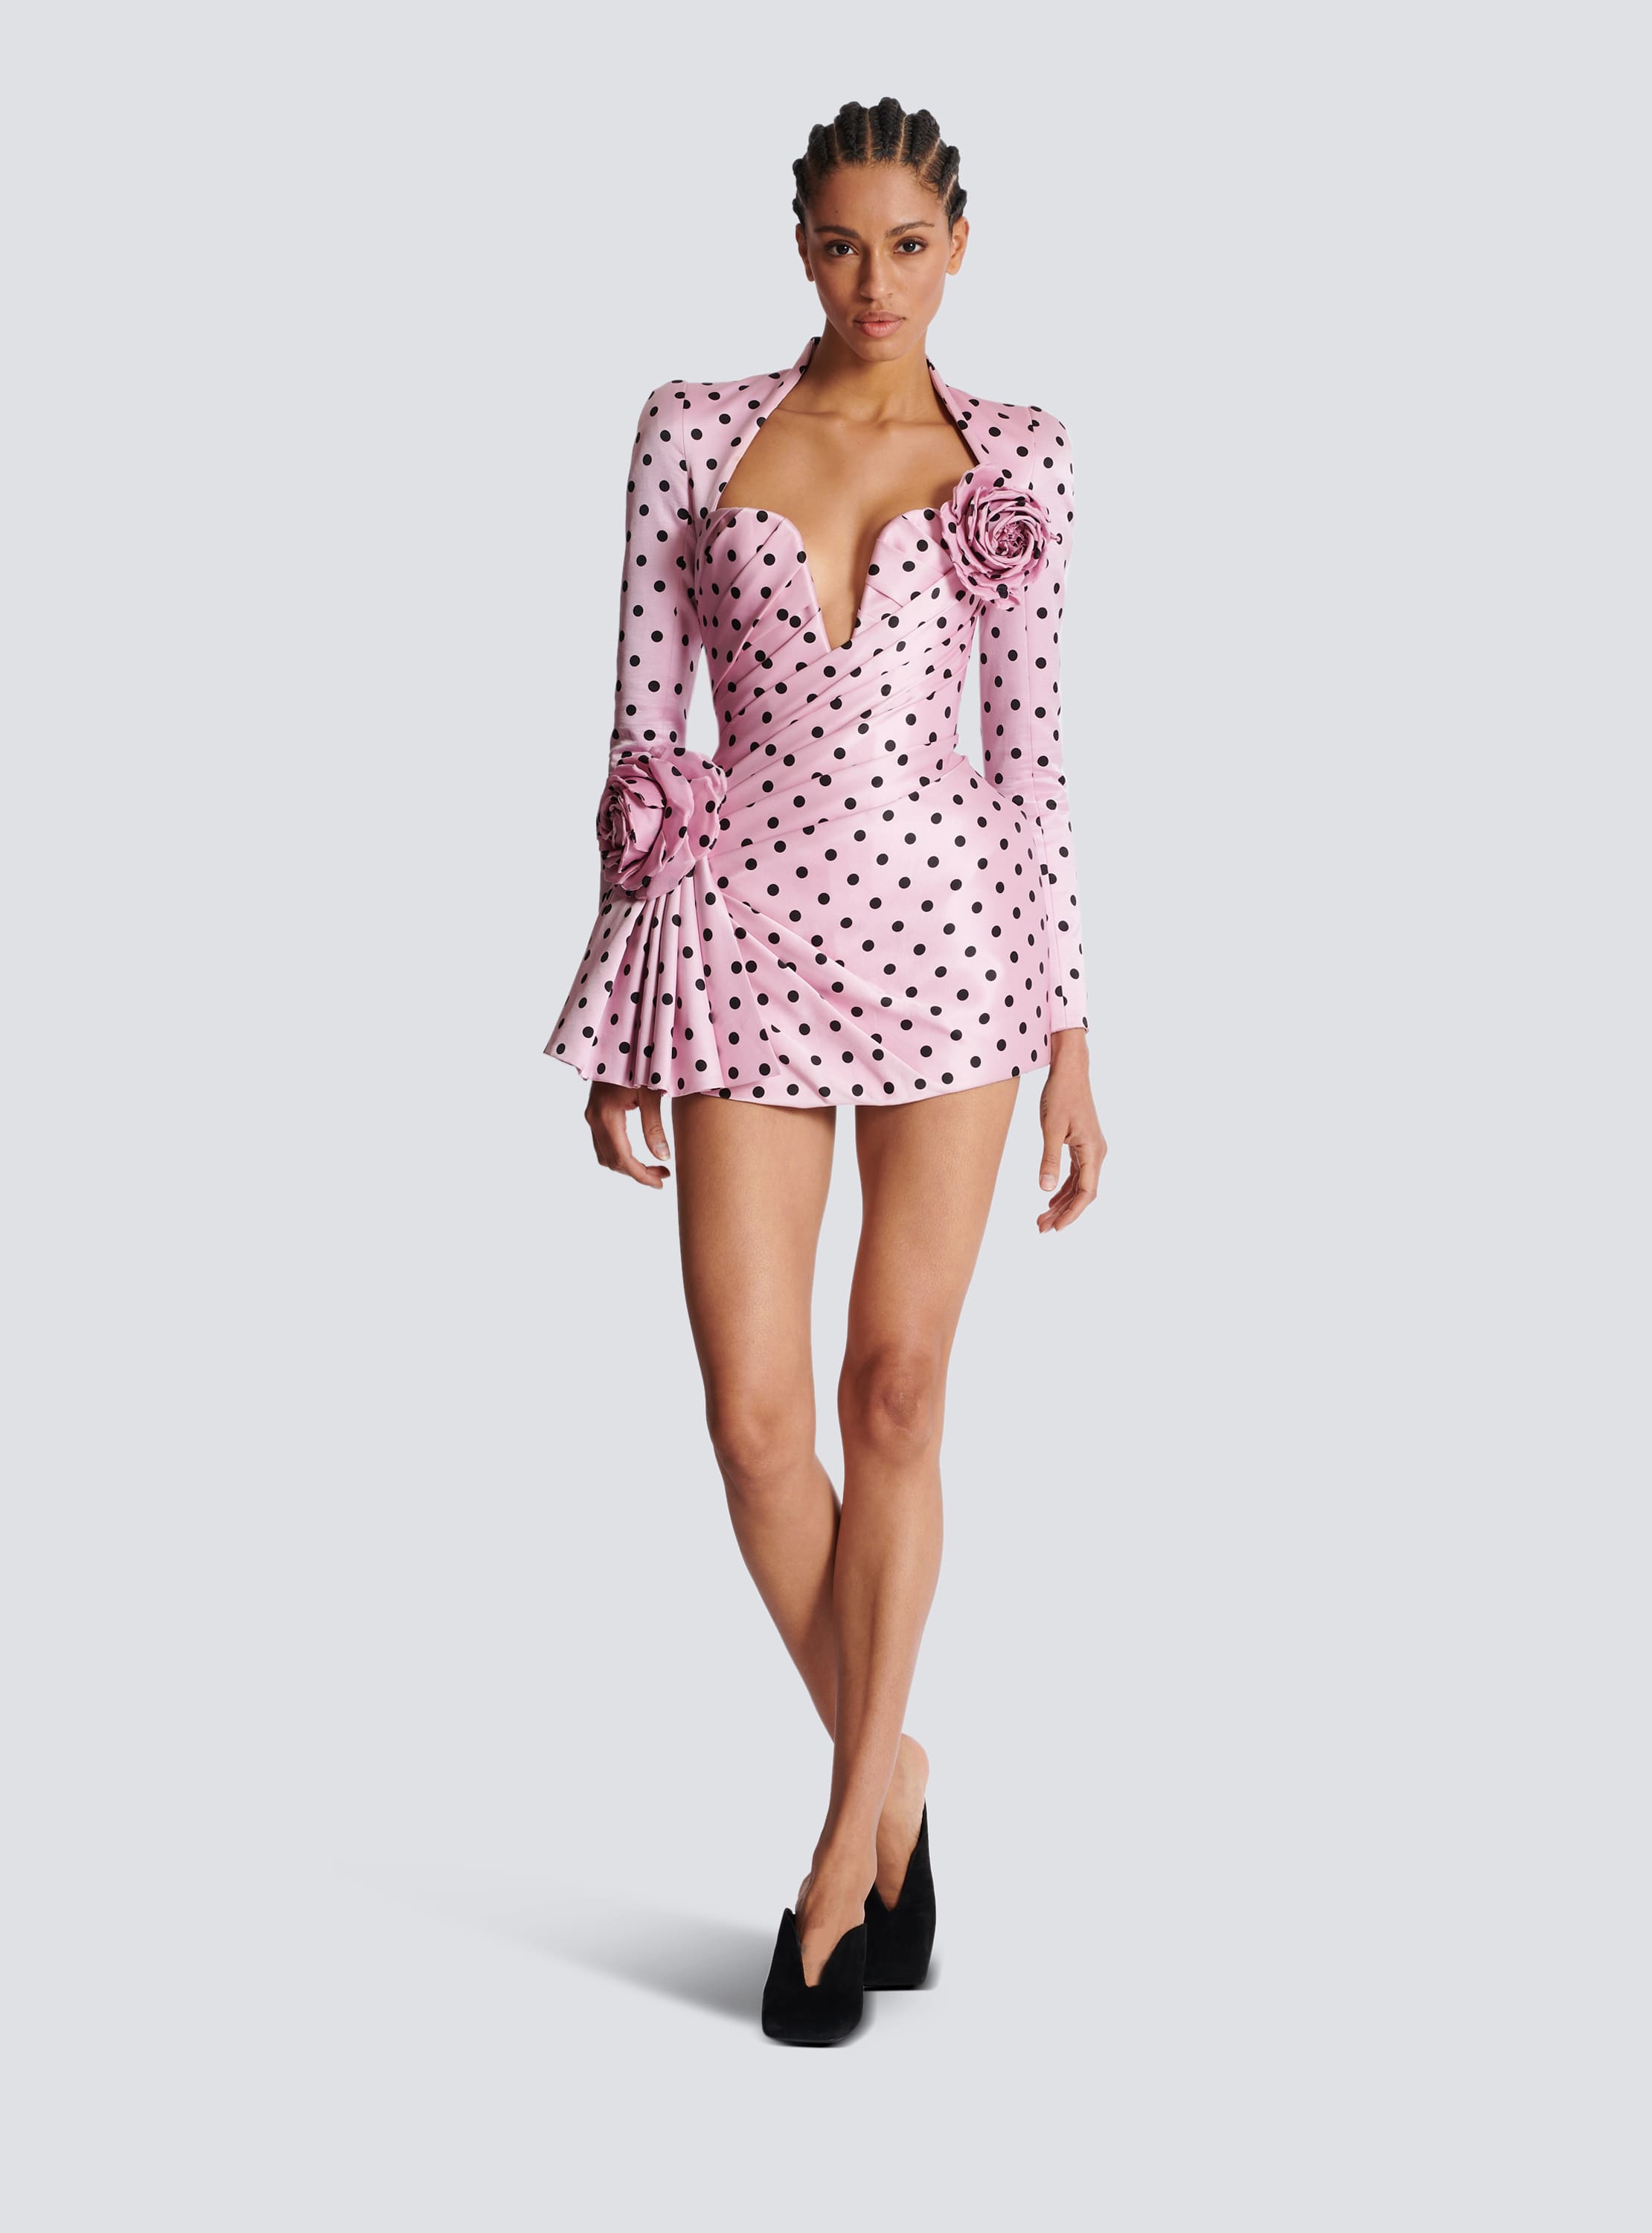 Kurzes Kleid mit Polka Dots-Print